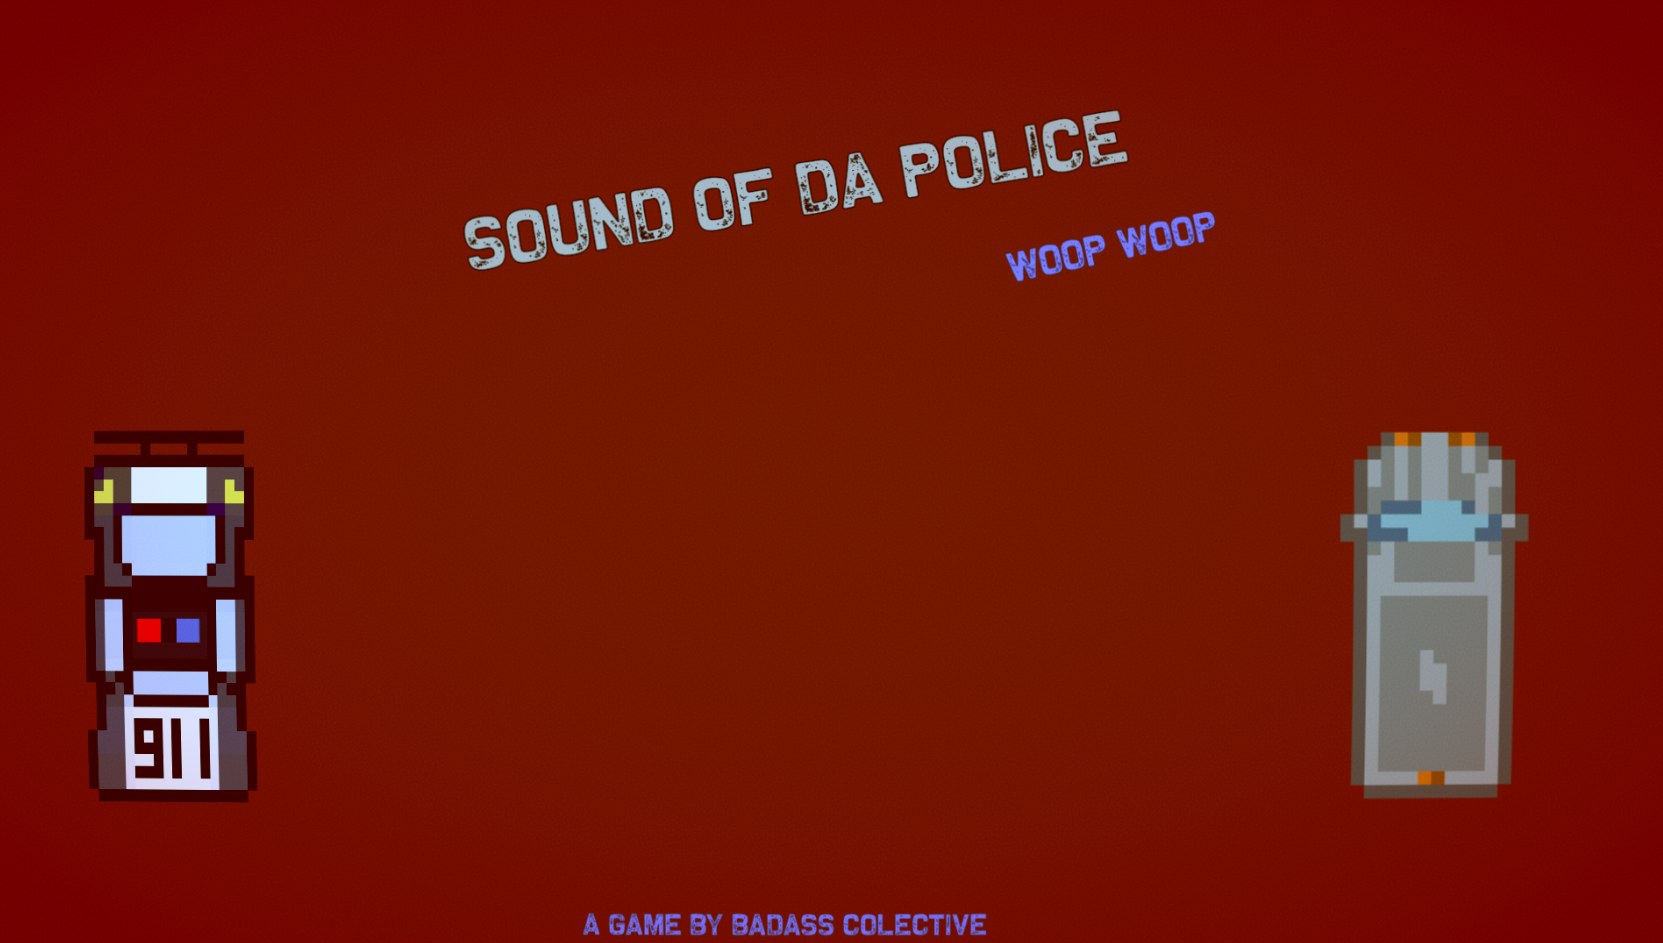 Sound of Da Police